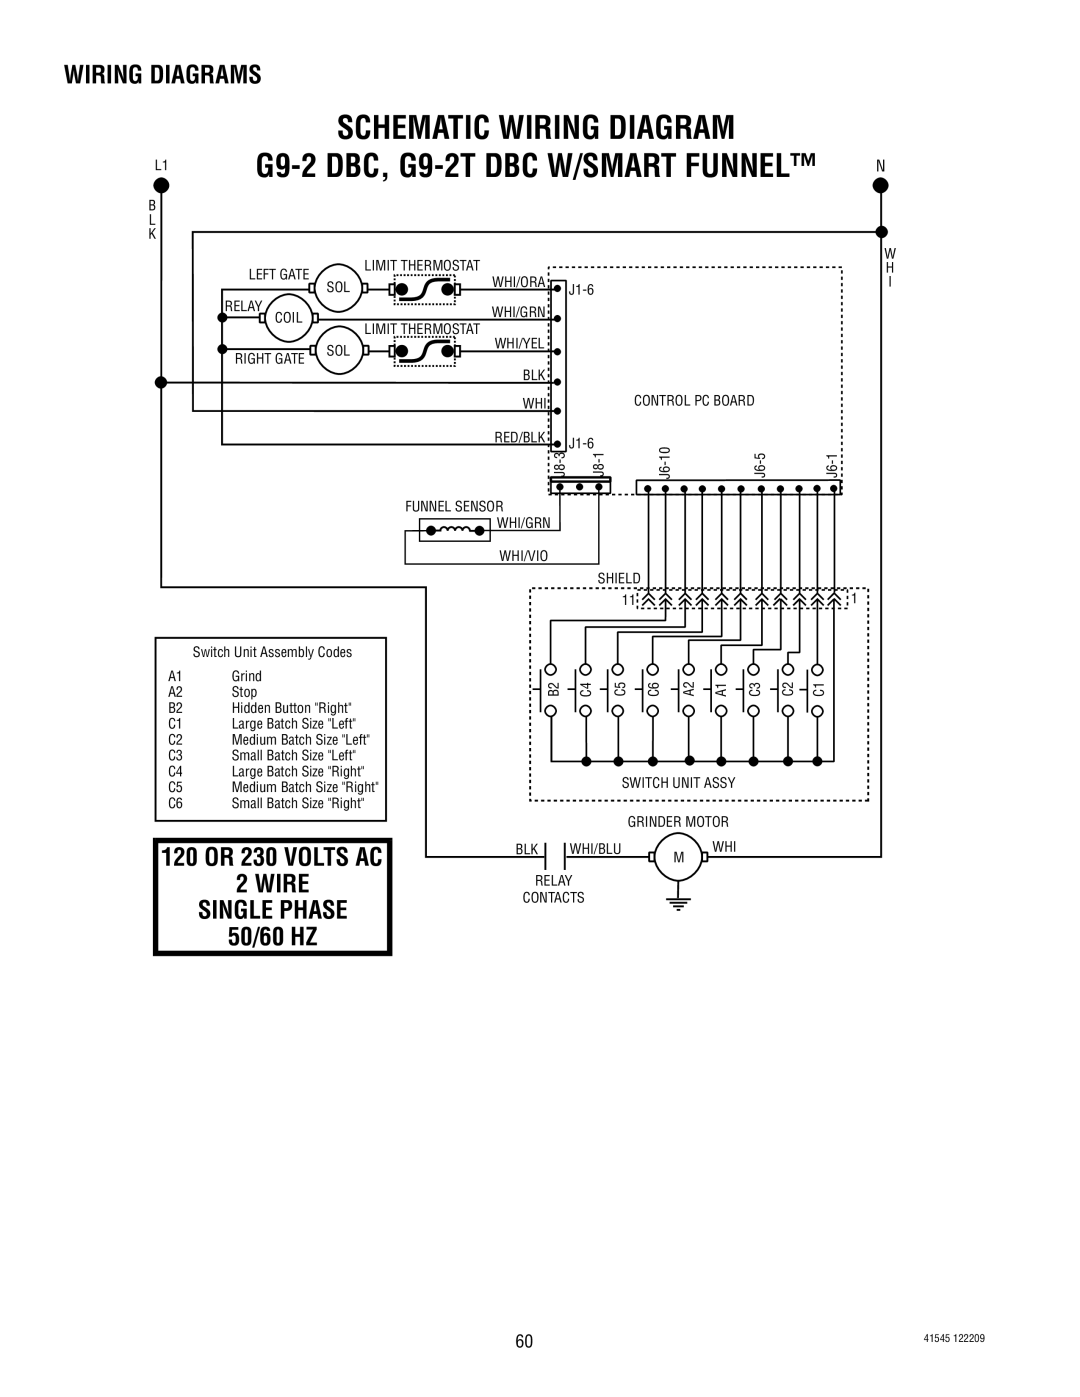 Bunn LPG-2 Schematic Wiring Diagram, G9-2DBC, G9-2TDBC W/SMART FUNNEL, Wiring Diagrams, 2WIRE SINGLE PHASE 50/60 HZ 